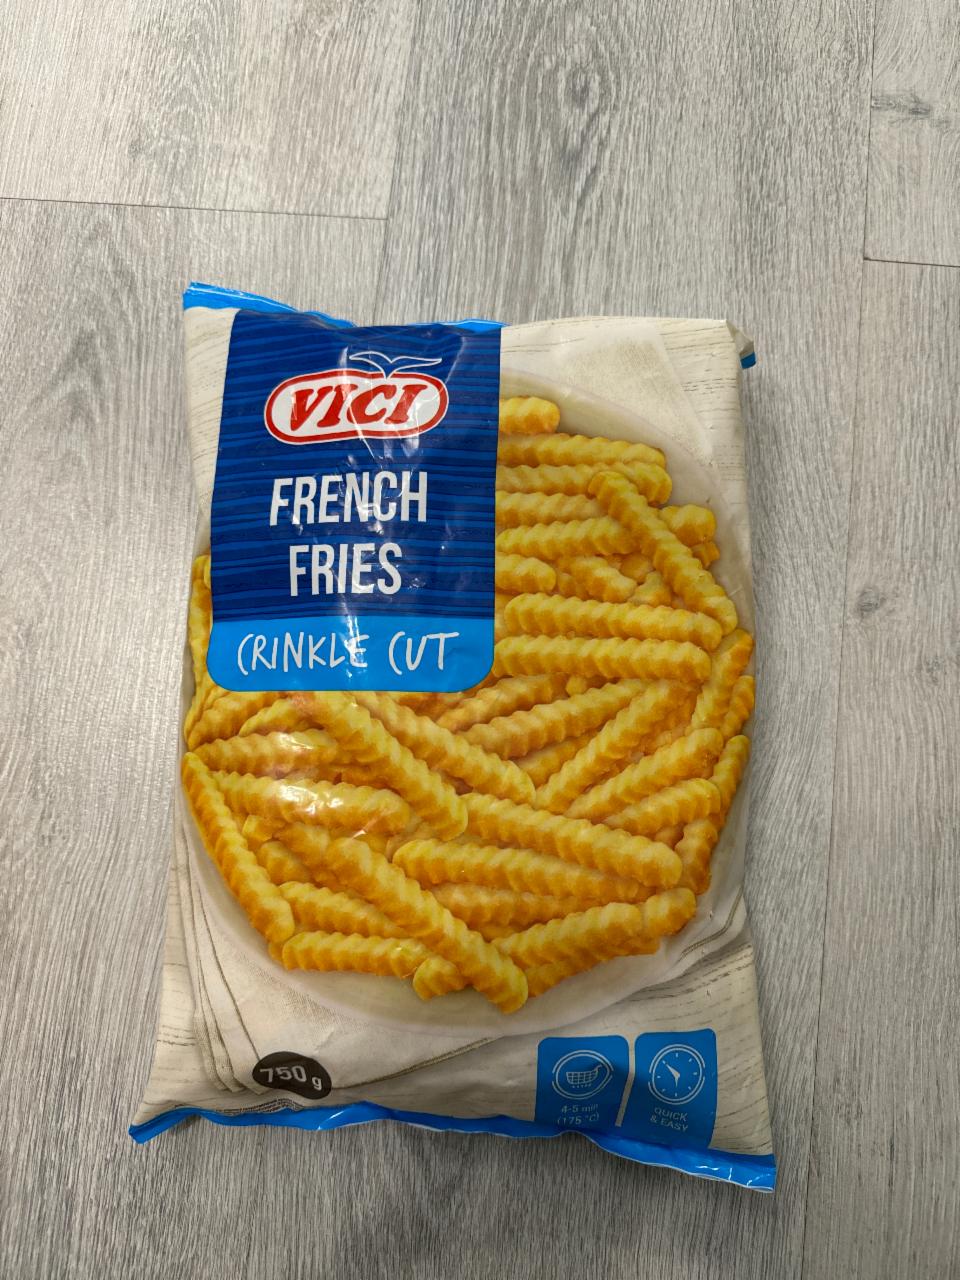 Фото - French fries Vici